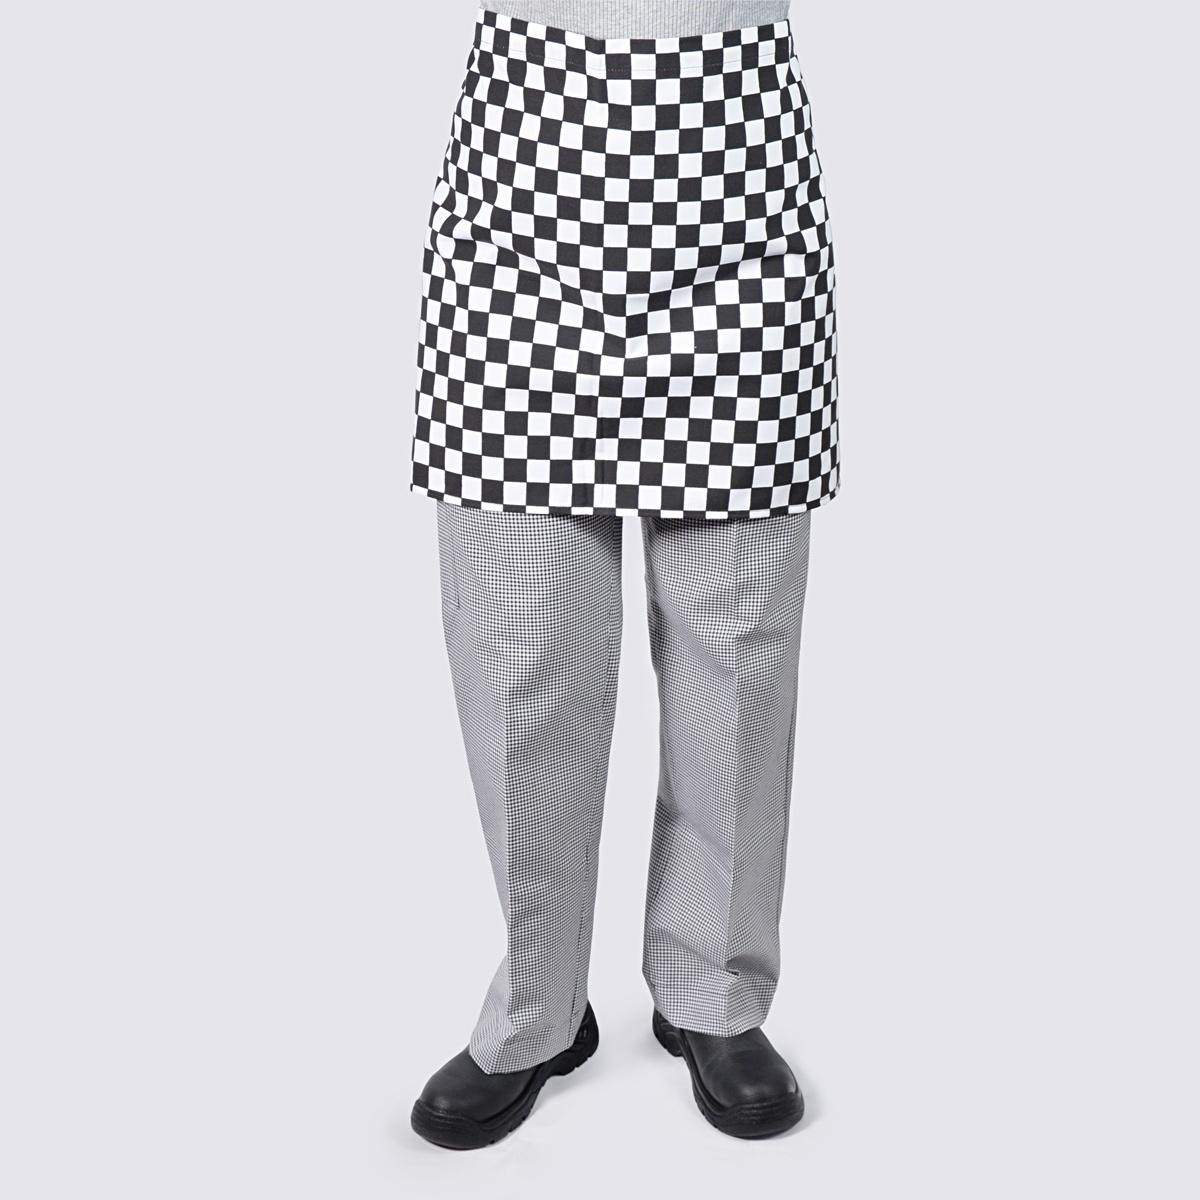 Bistro Chef Aprons- Half - B & W Checkered - Short